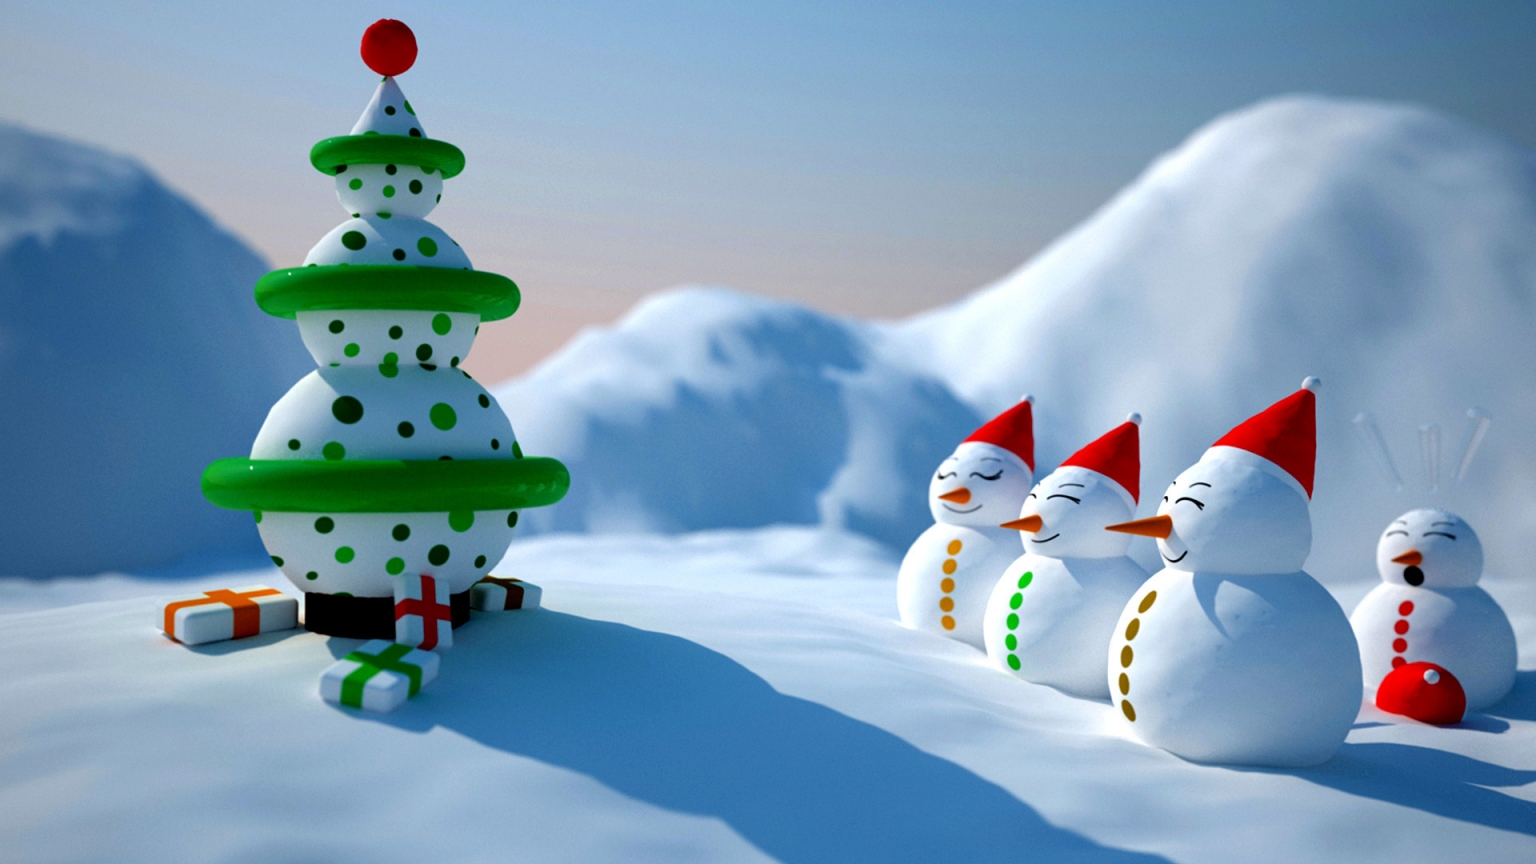 Snowman Christmas for 1536 x 864 HDTV resolution